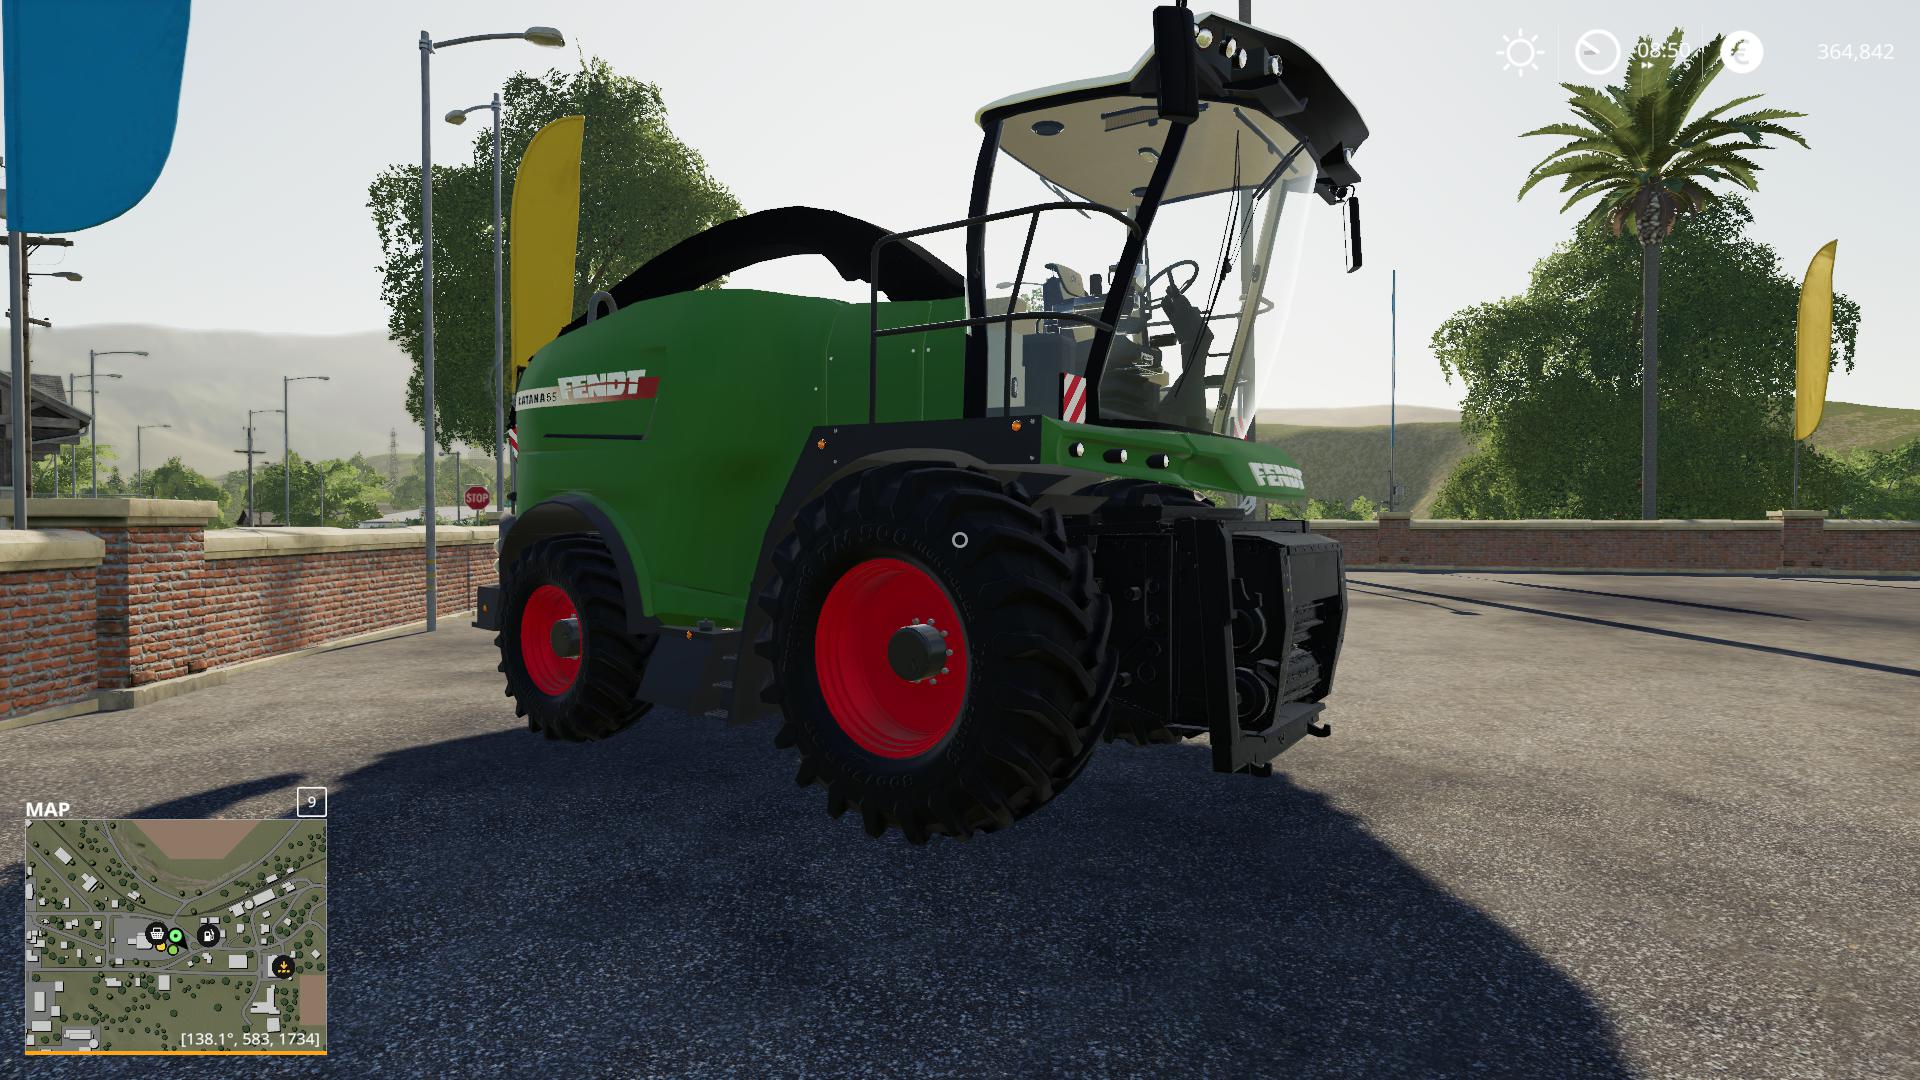 Ls19 Fendt Katana V10 Farming Simulator 19 Mod Ls19 Mod Download Images And Photos Finder 9330